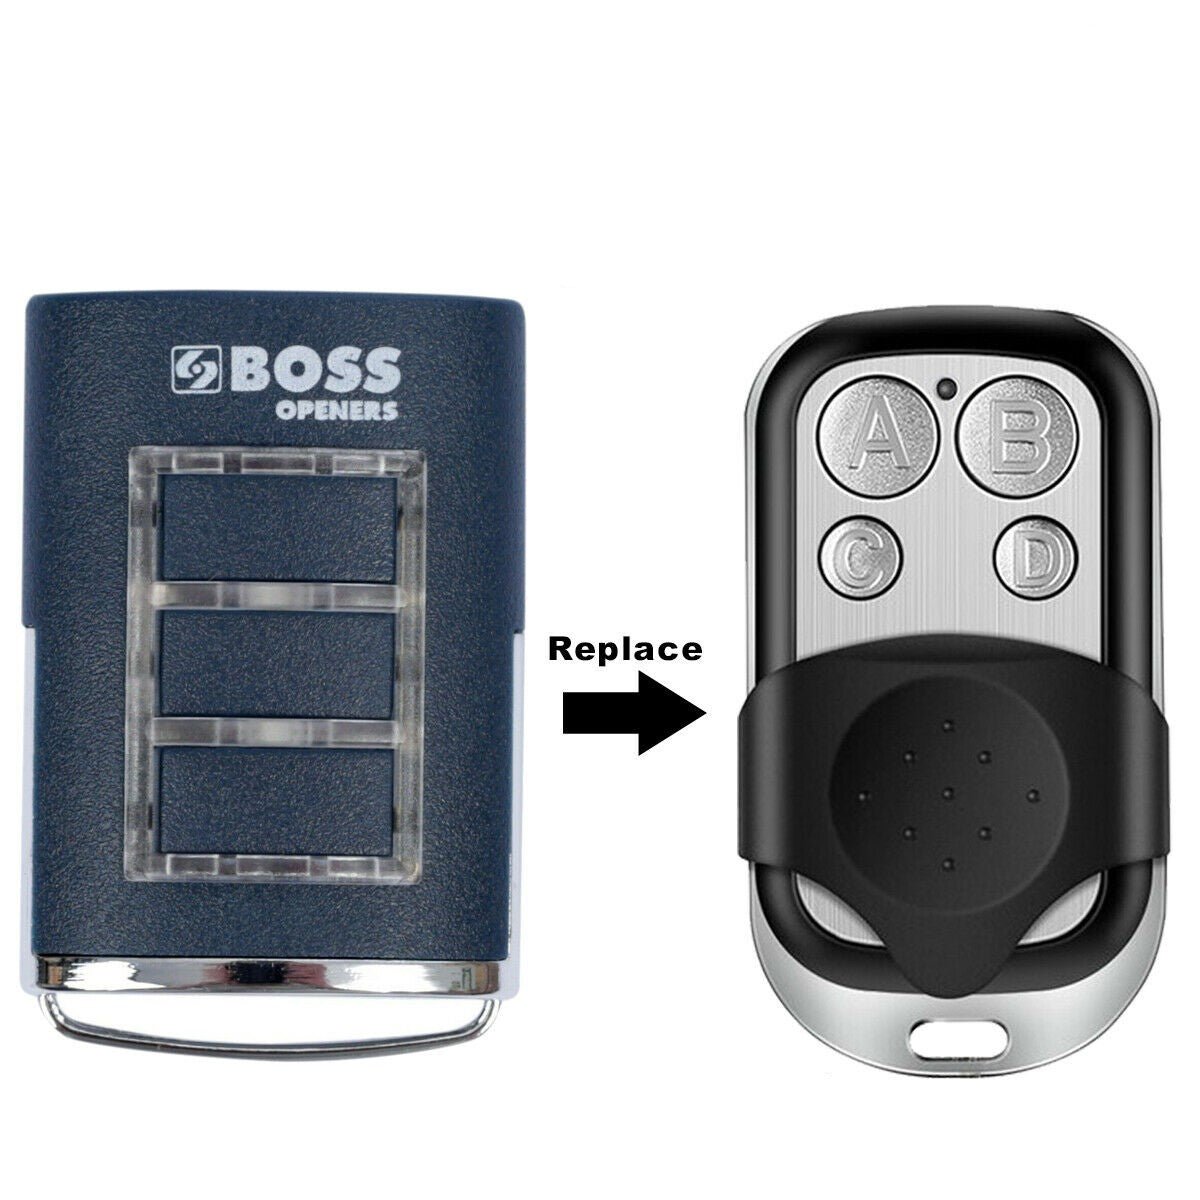 Boss Compatible Garage Door Remotes